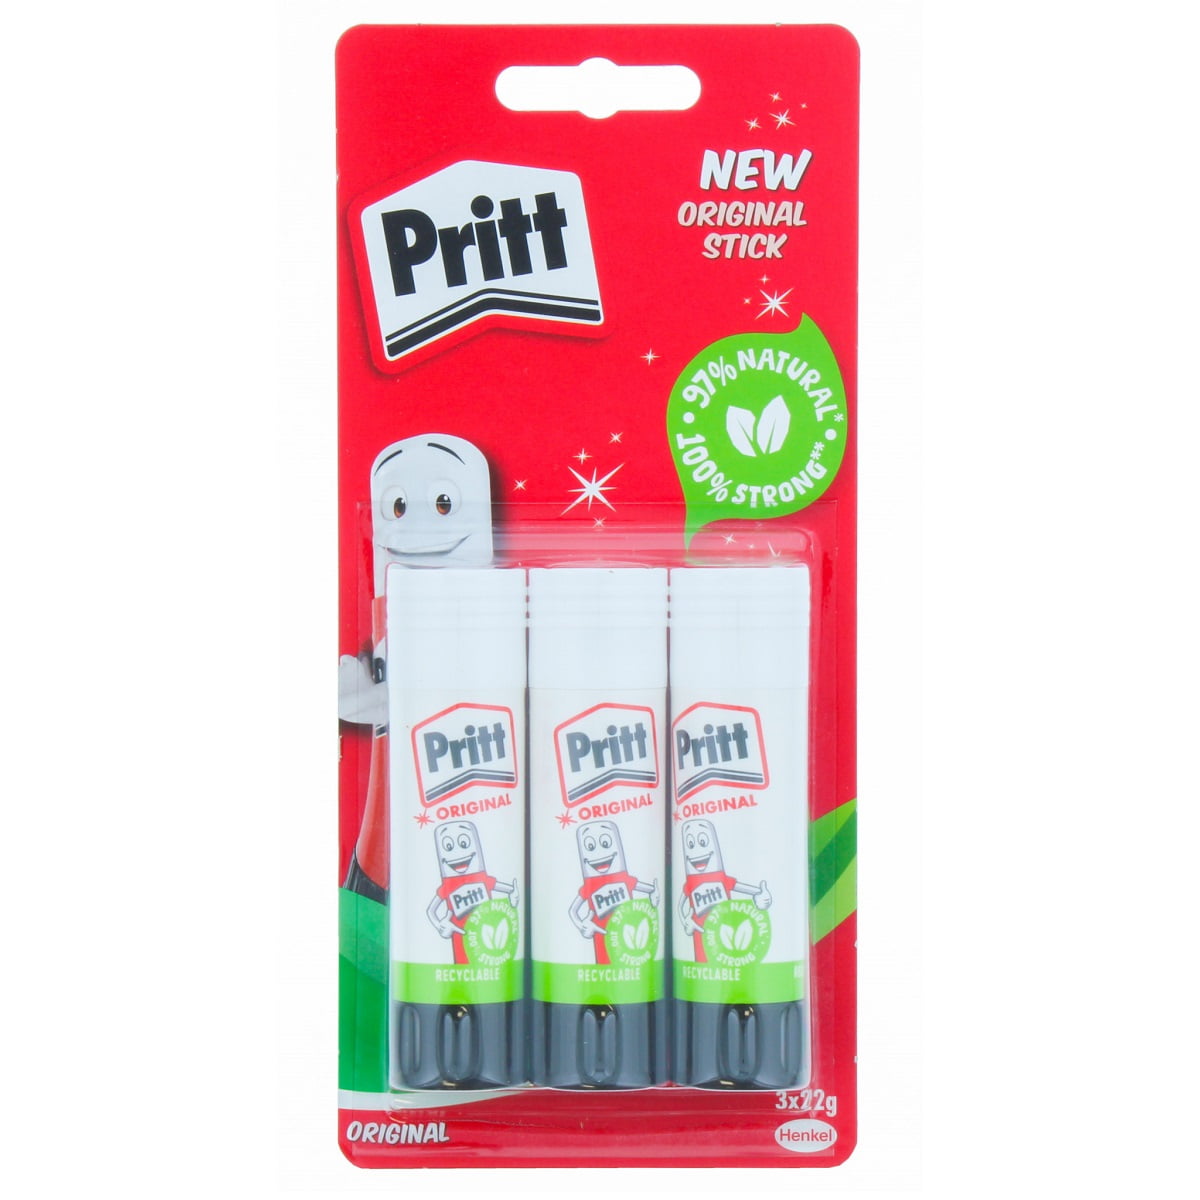 Pritt Glue Stick 43g x 3 Pack, Shop Today. Get it Tomorrow!